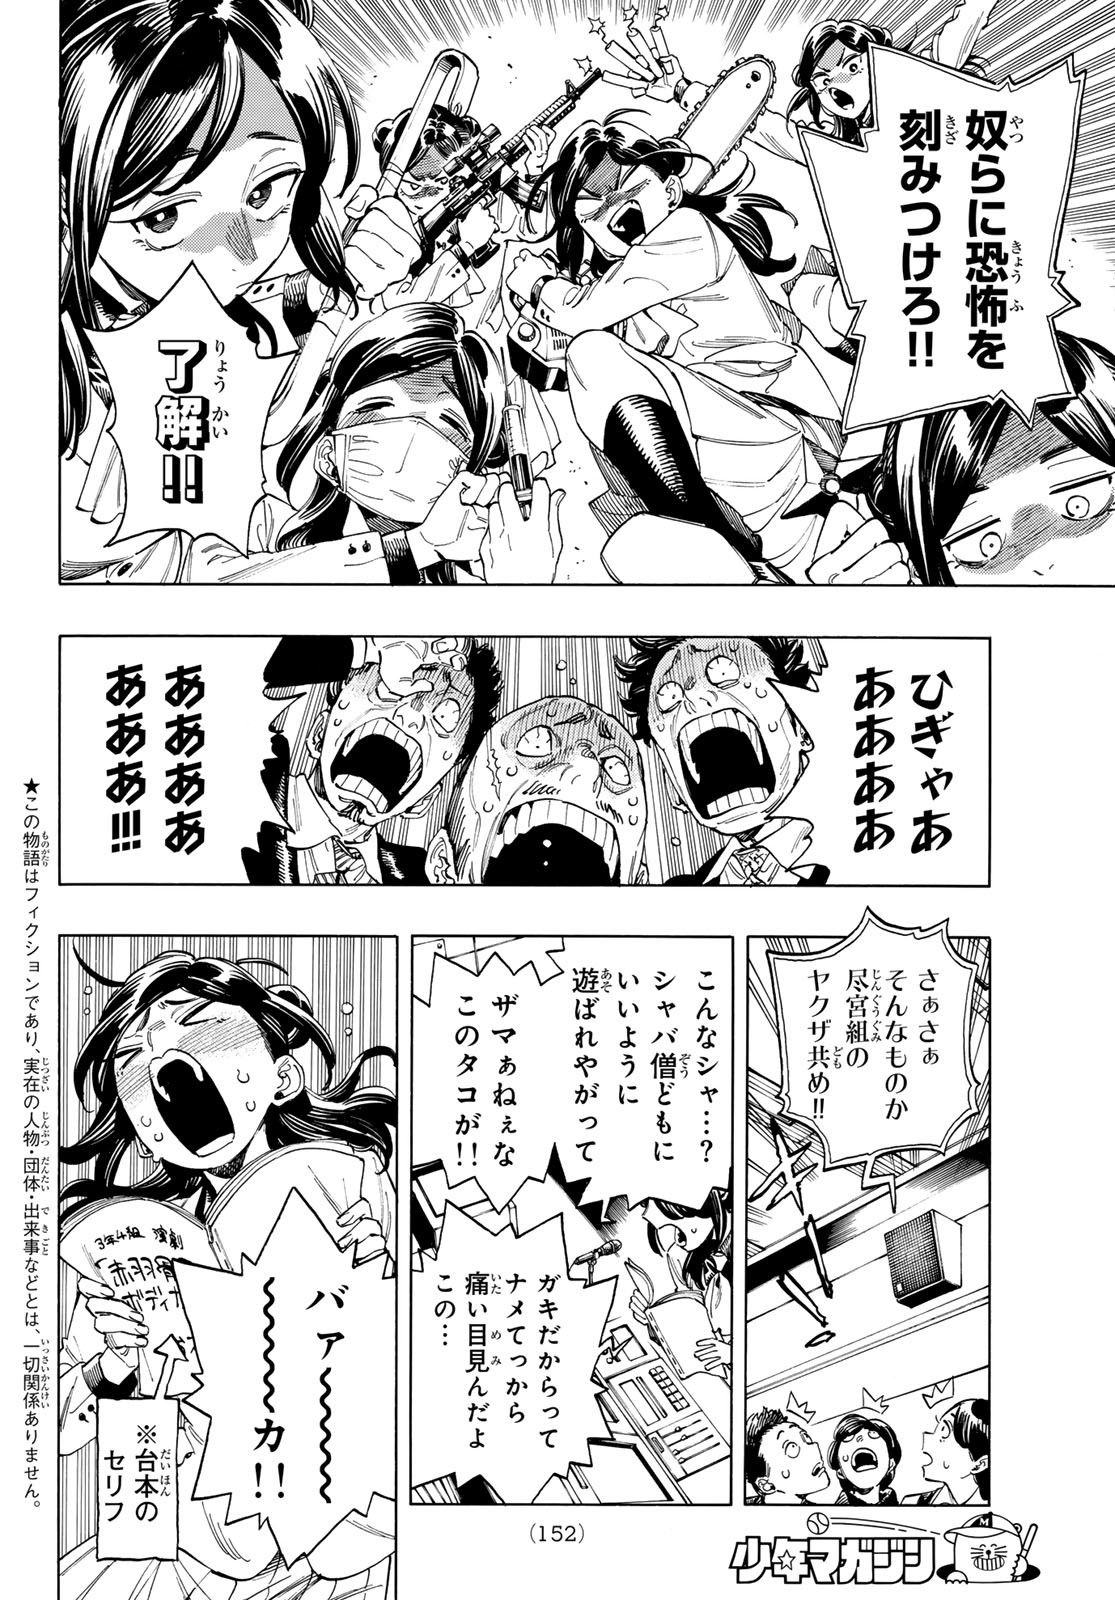 Akabane Honeko no Bodyguard - Chapter 60 - Page 2